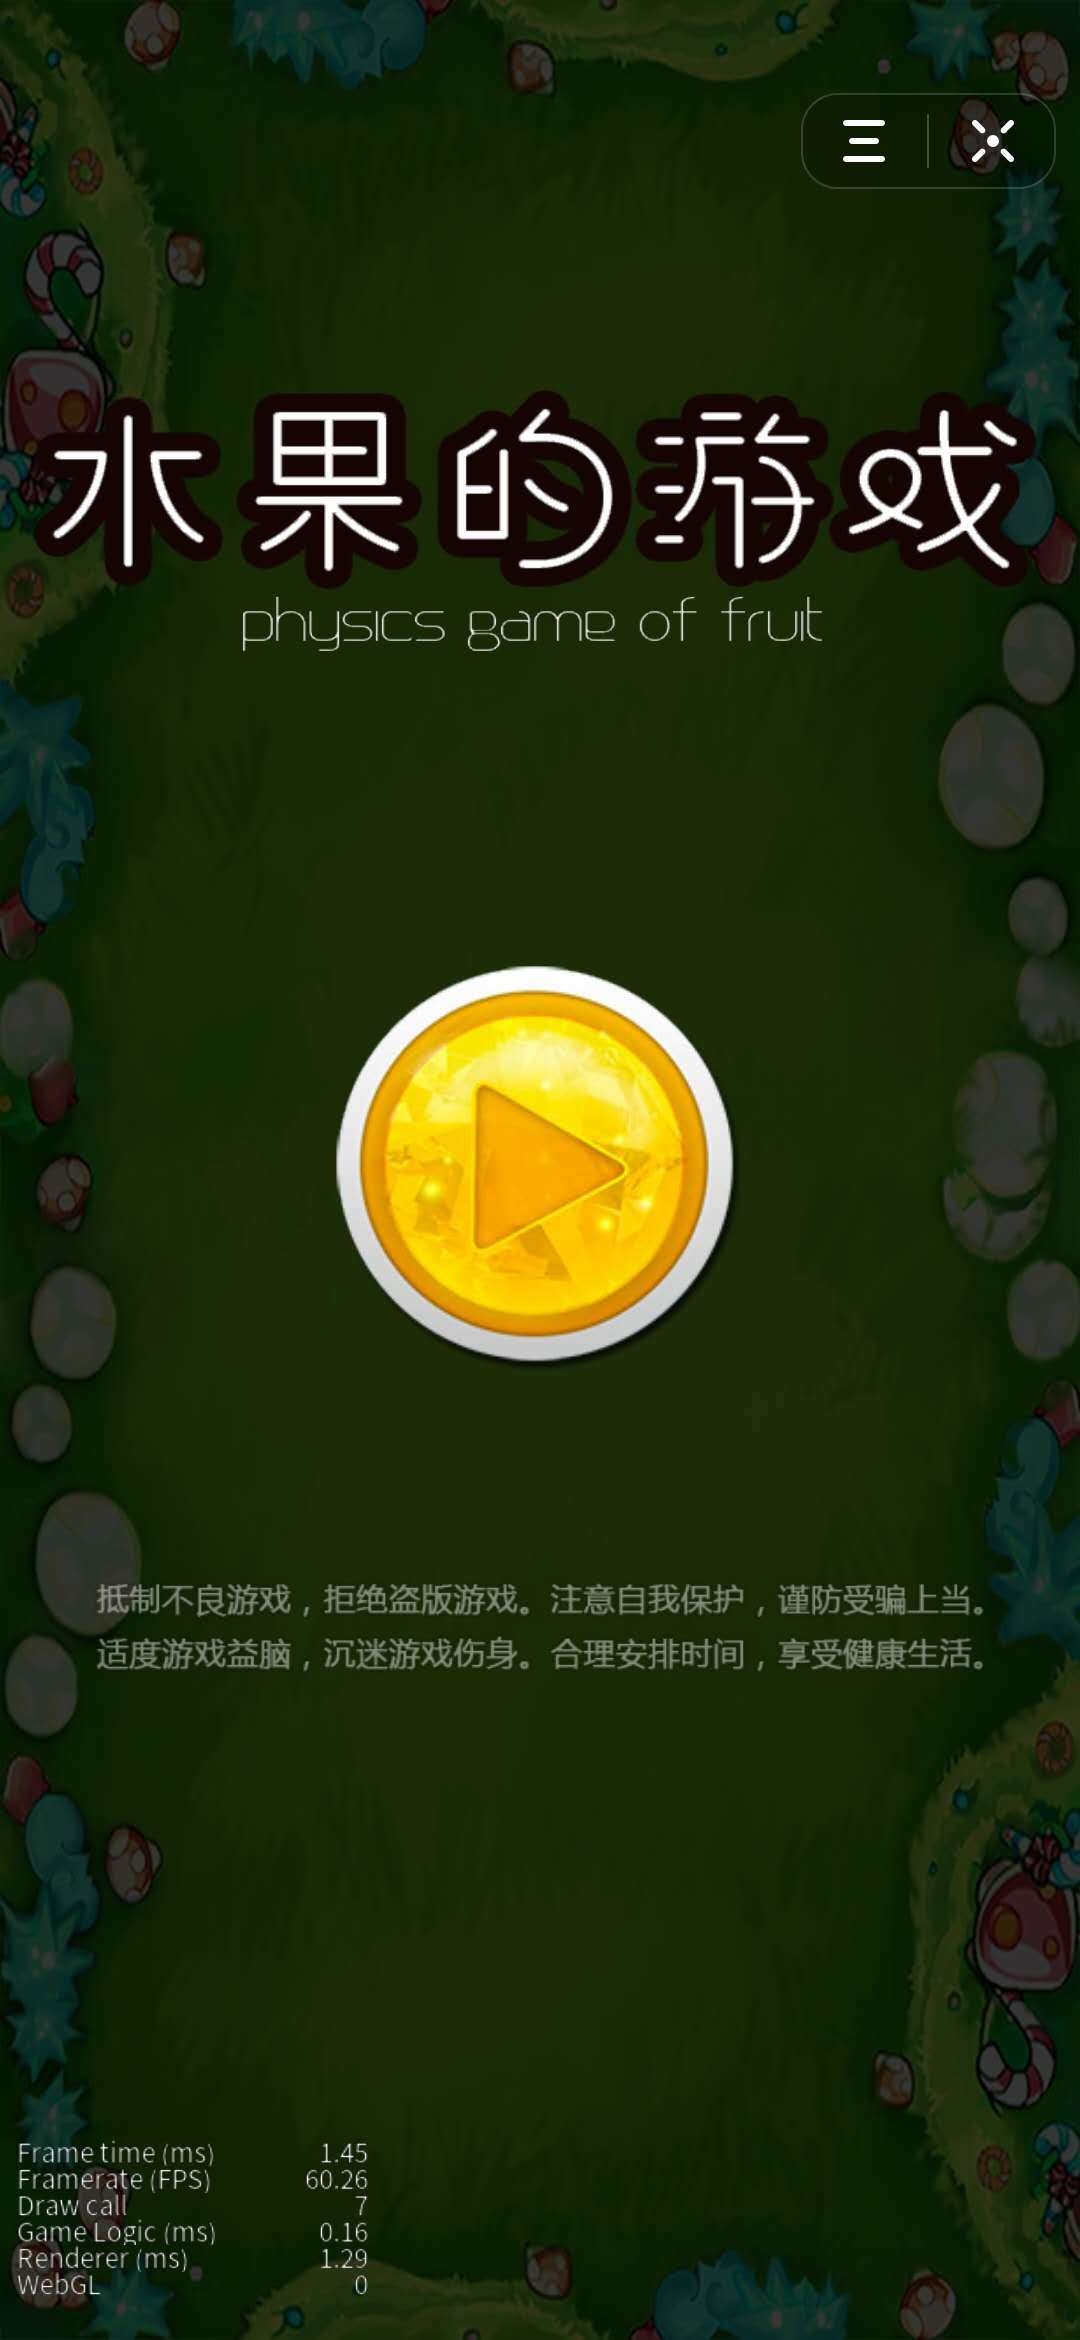 Screenshot 1 of jeu de fruits 2.0